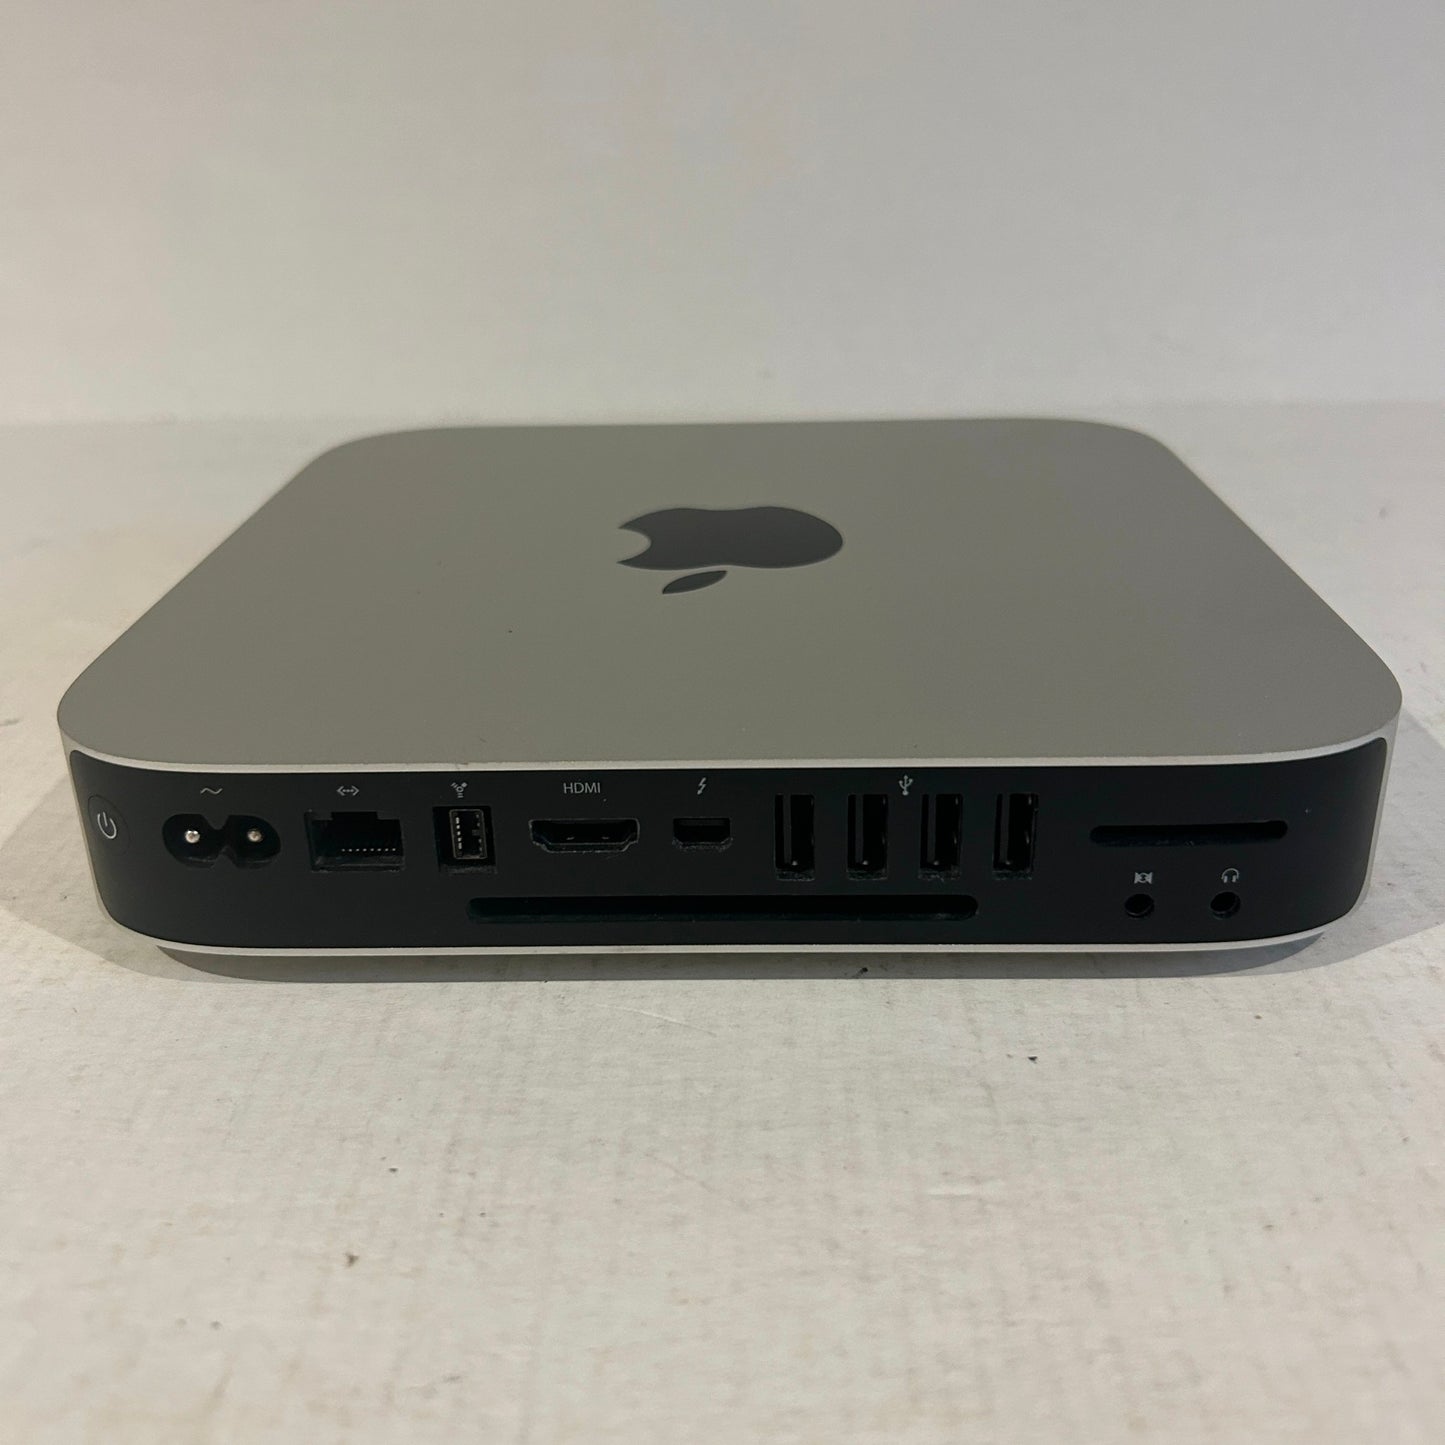 Apple Mac Mini "Core i7" 2.3 Ghz - Late 2012 - A1347